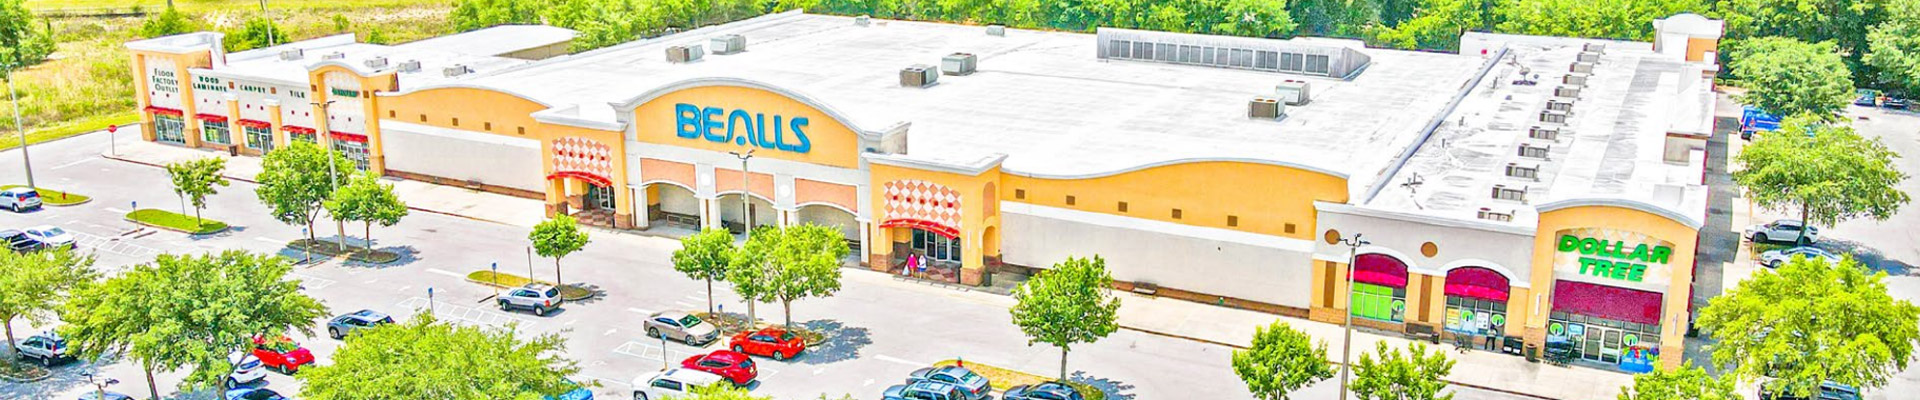 Country Oaks Retail Center - Ocala, Florida